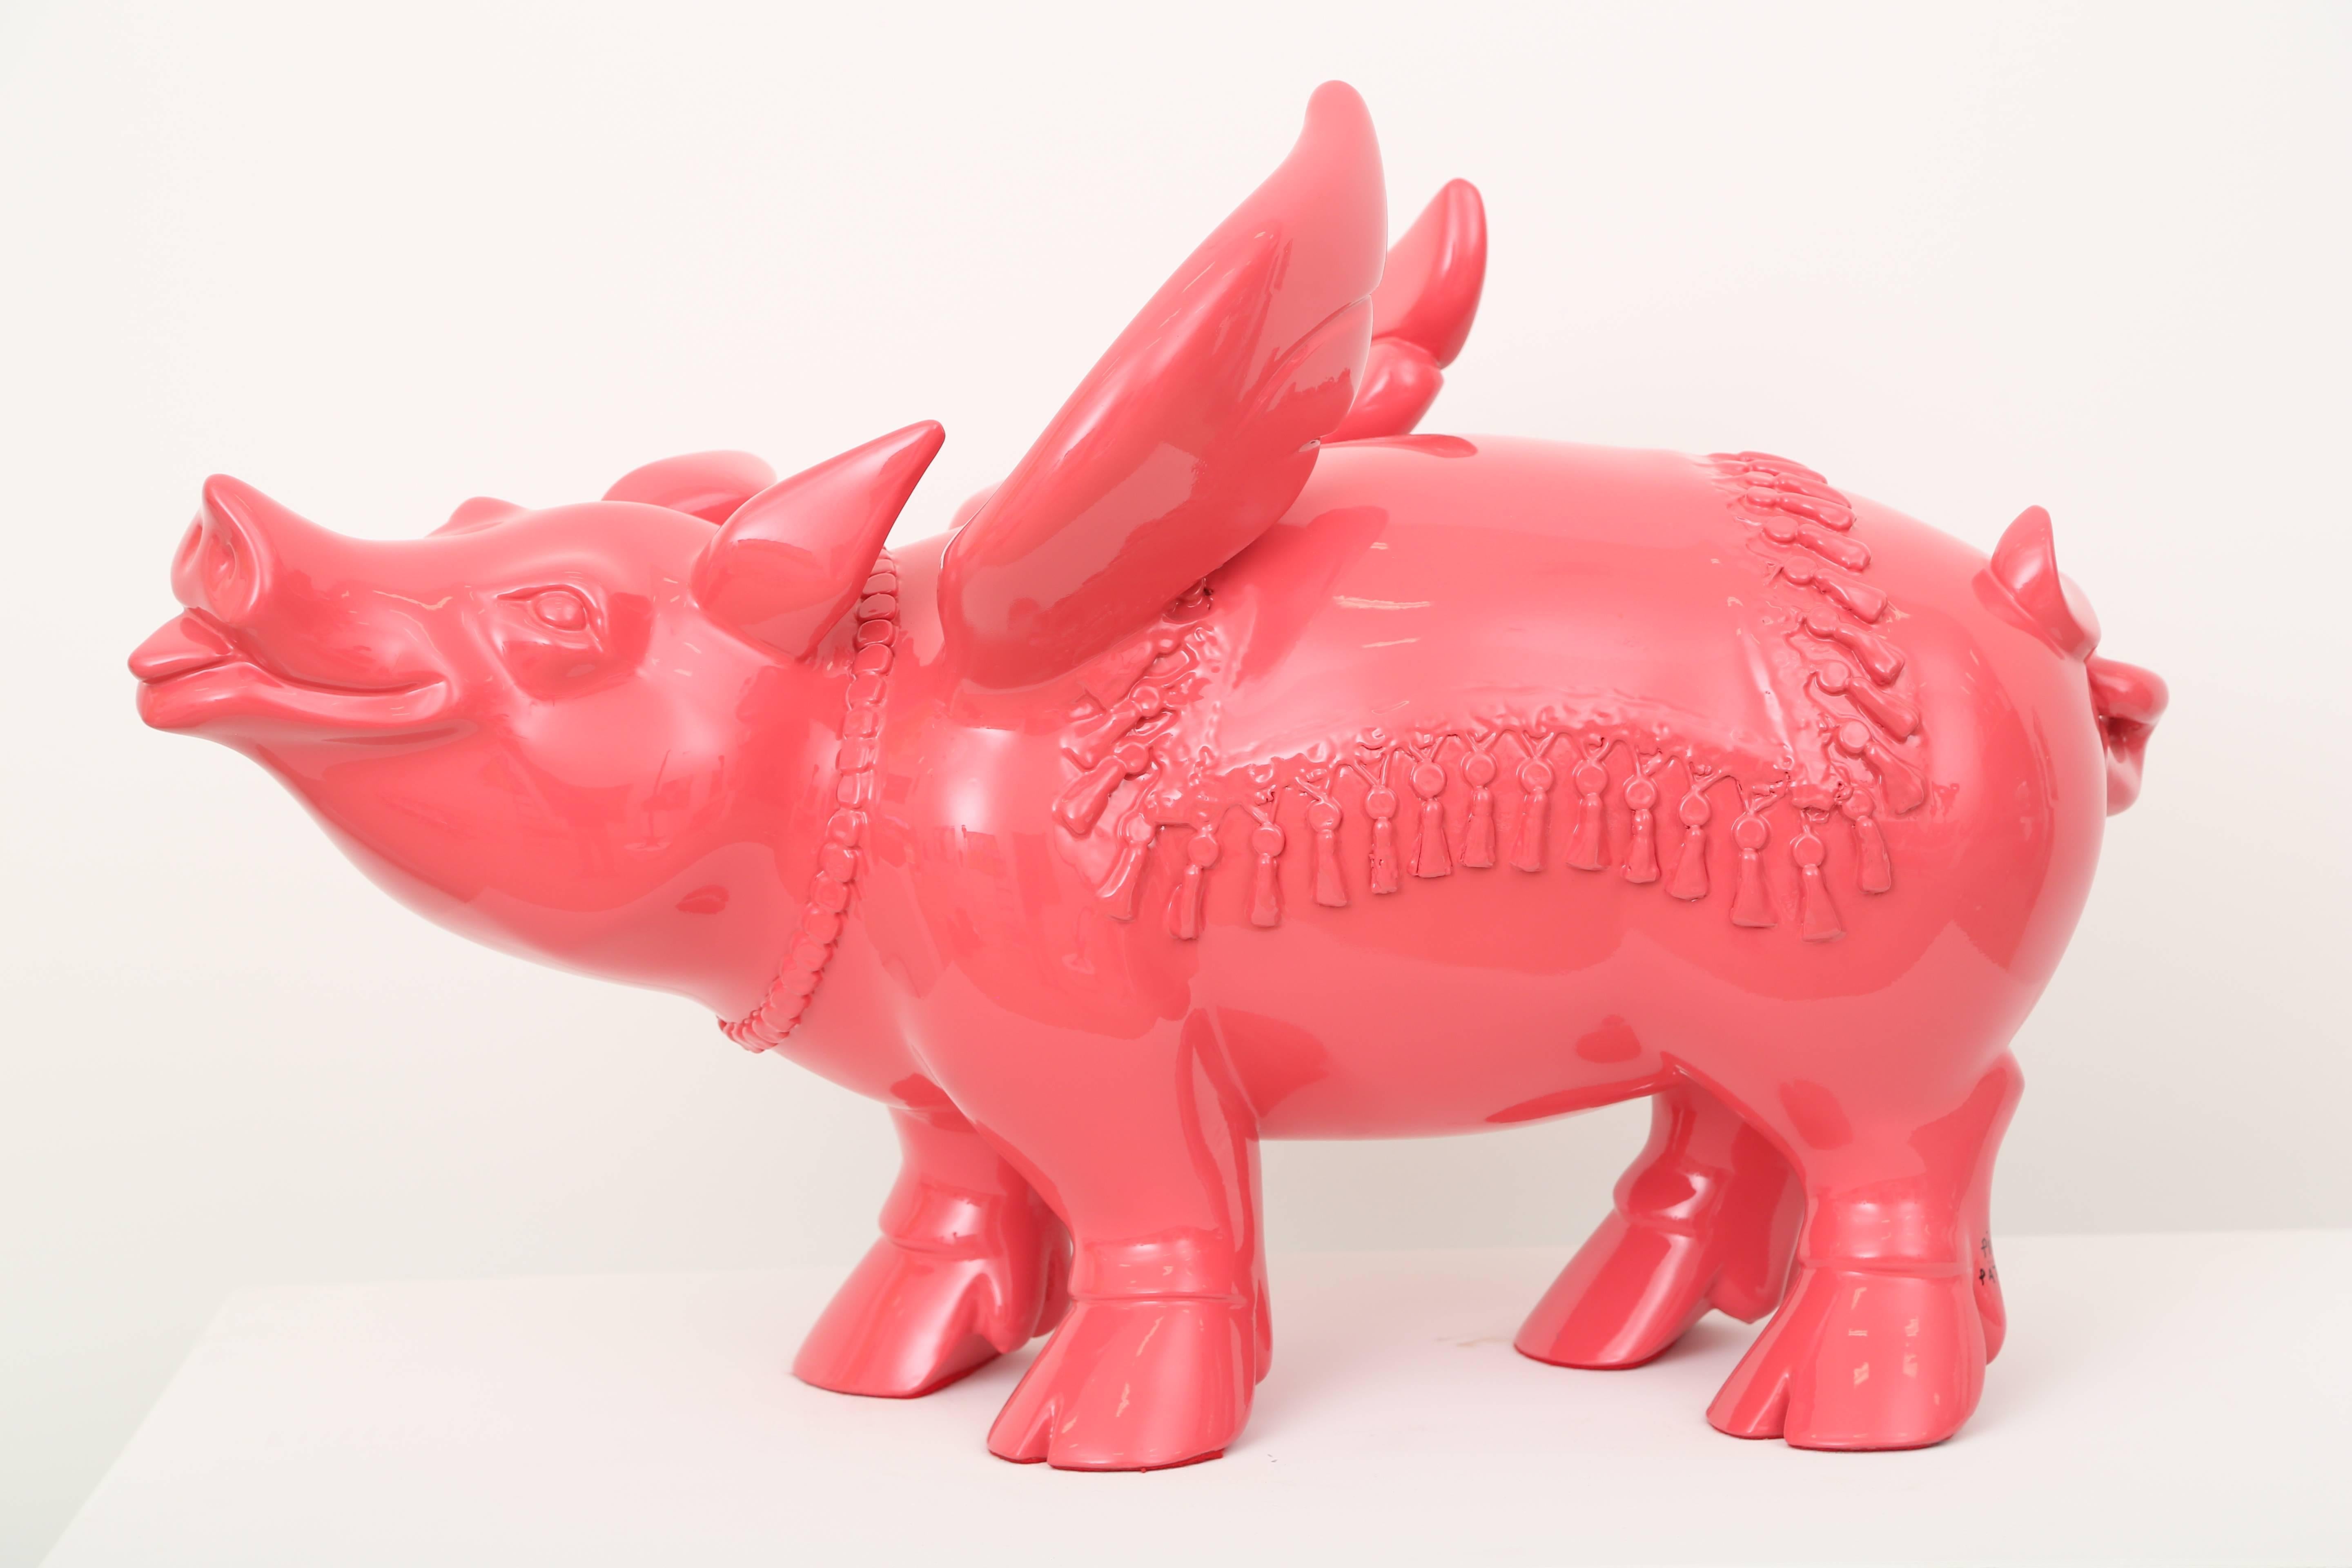 Patrick Schumacher Figurative Sculpture - Pigasus - Pink Pig Resin Sculpture